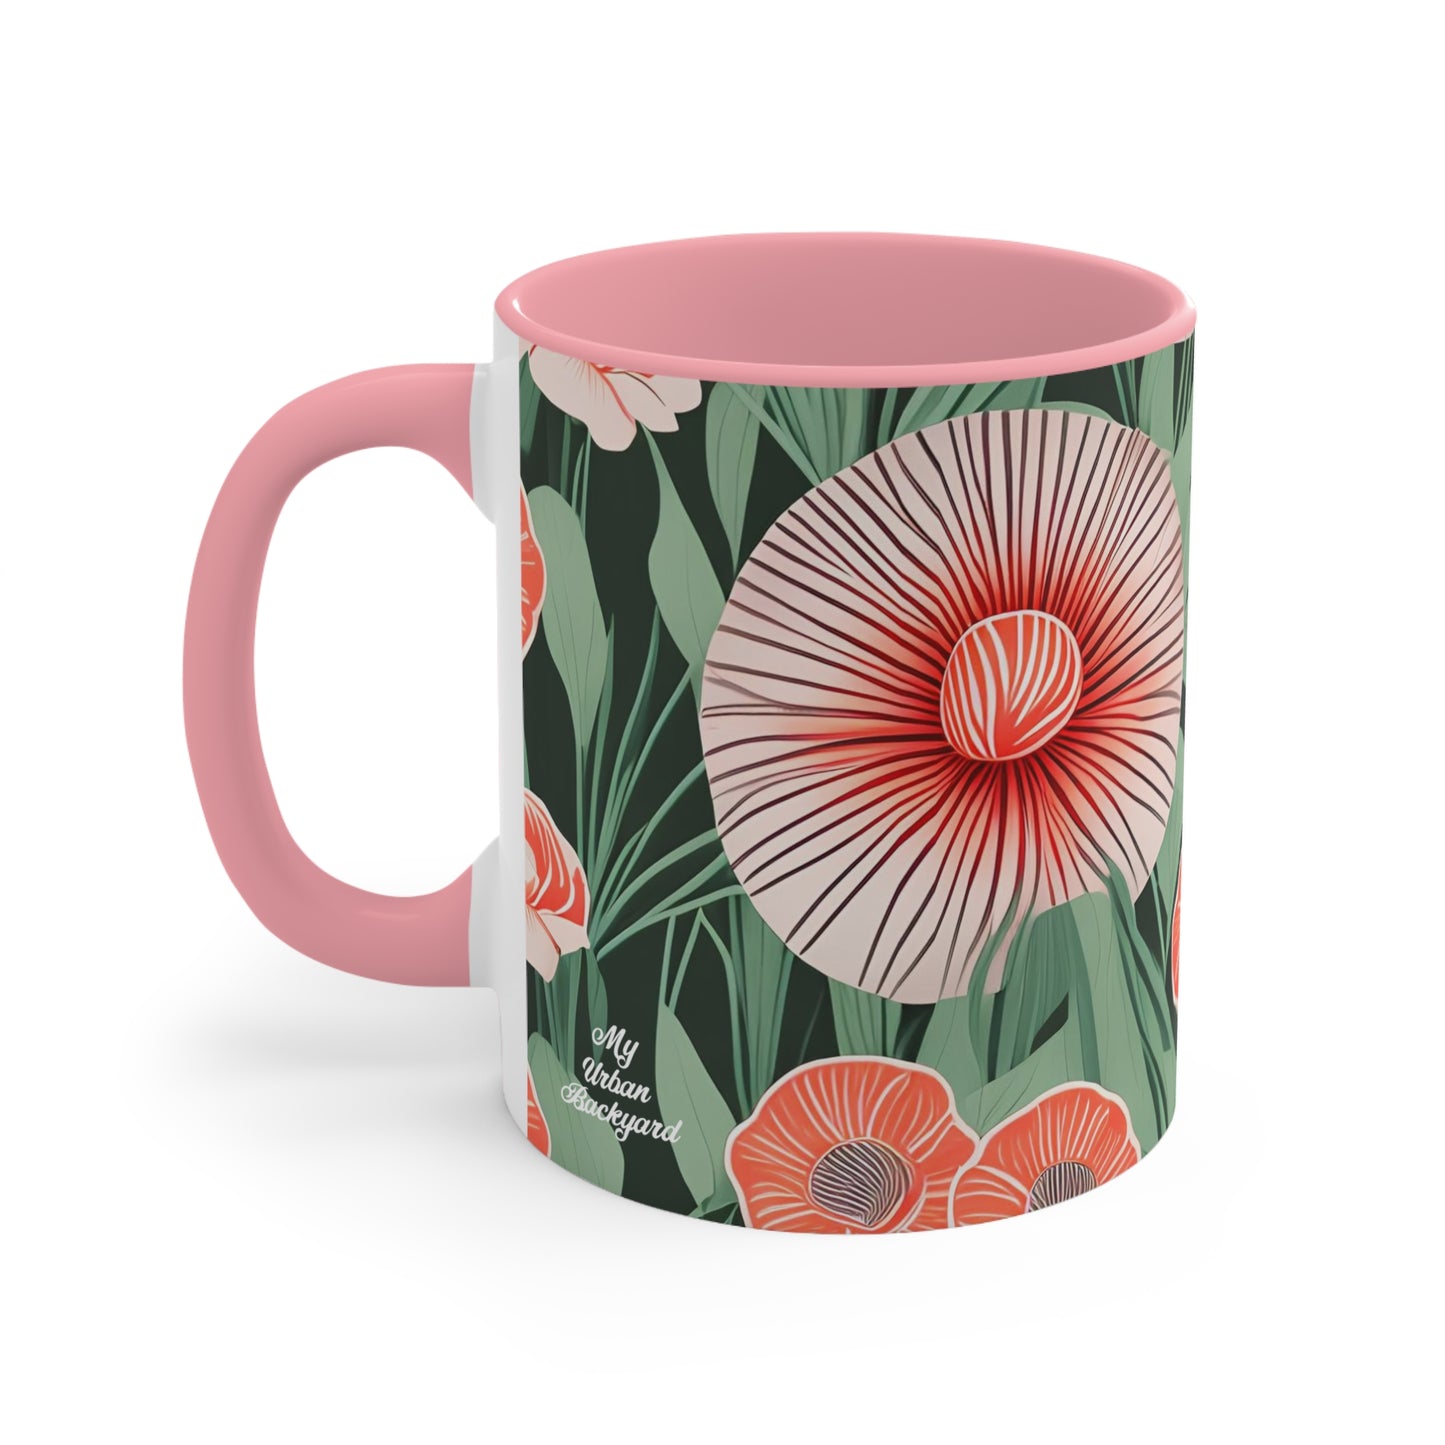 Art Deco Flowers, Ceramic Mug - Perfect for Coffee, Tea, and More!